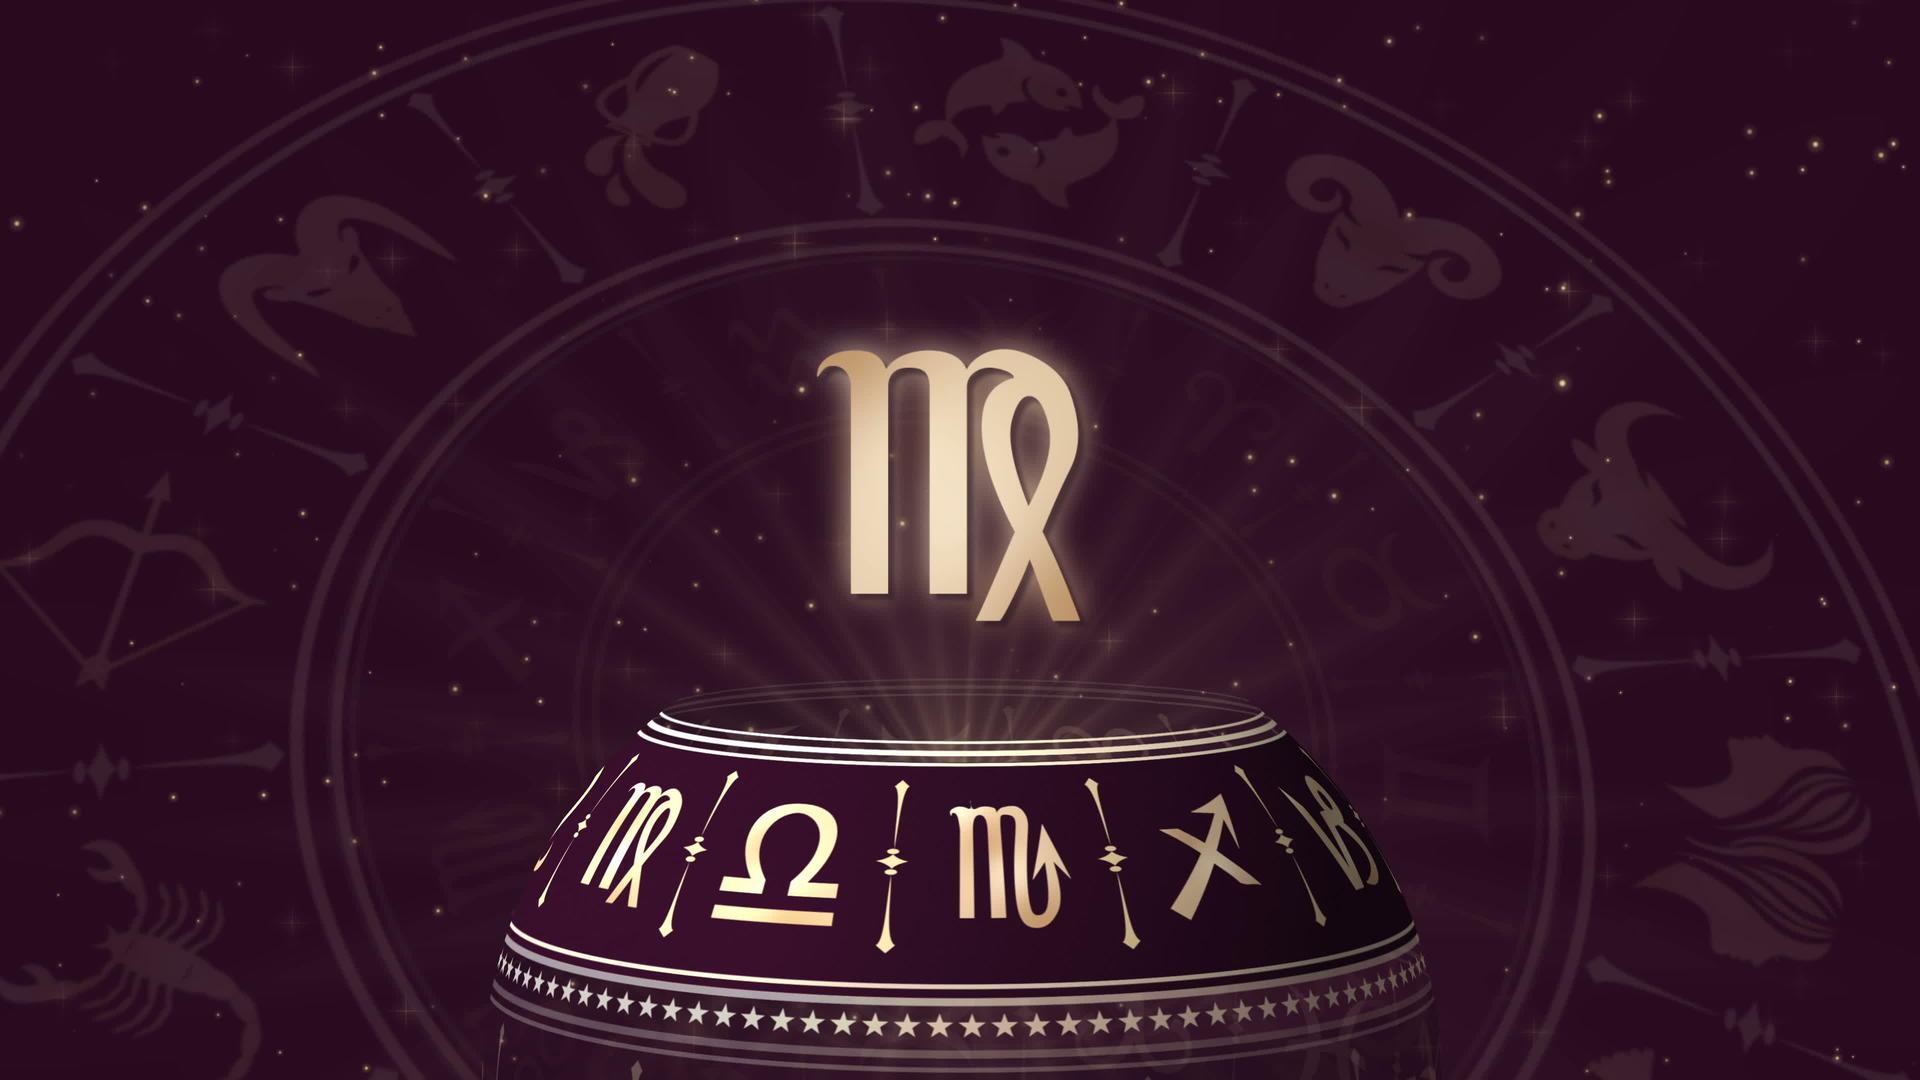 zodiac符号Virgo和星座轮视频的预览图